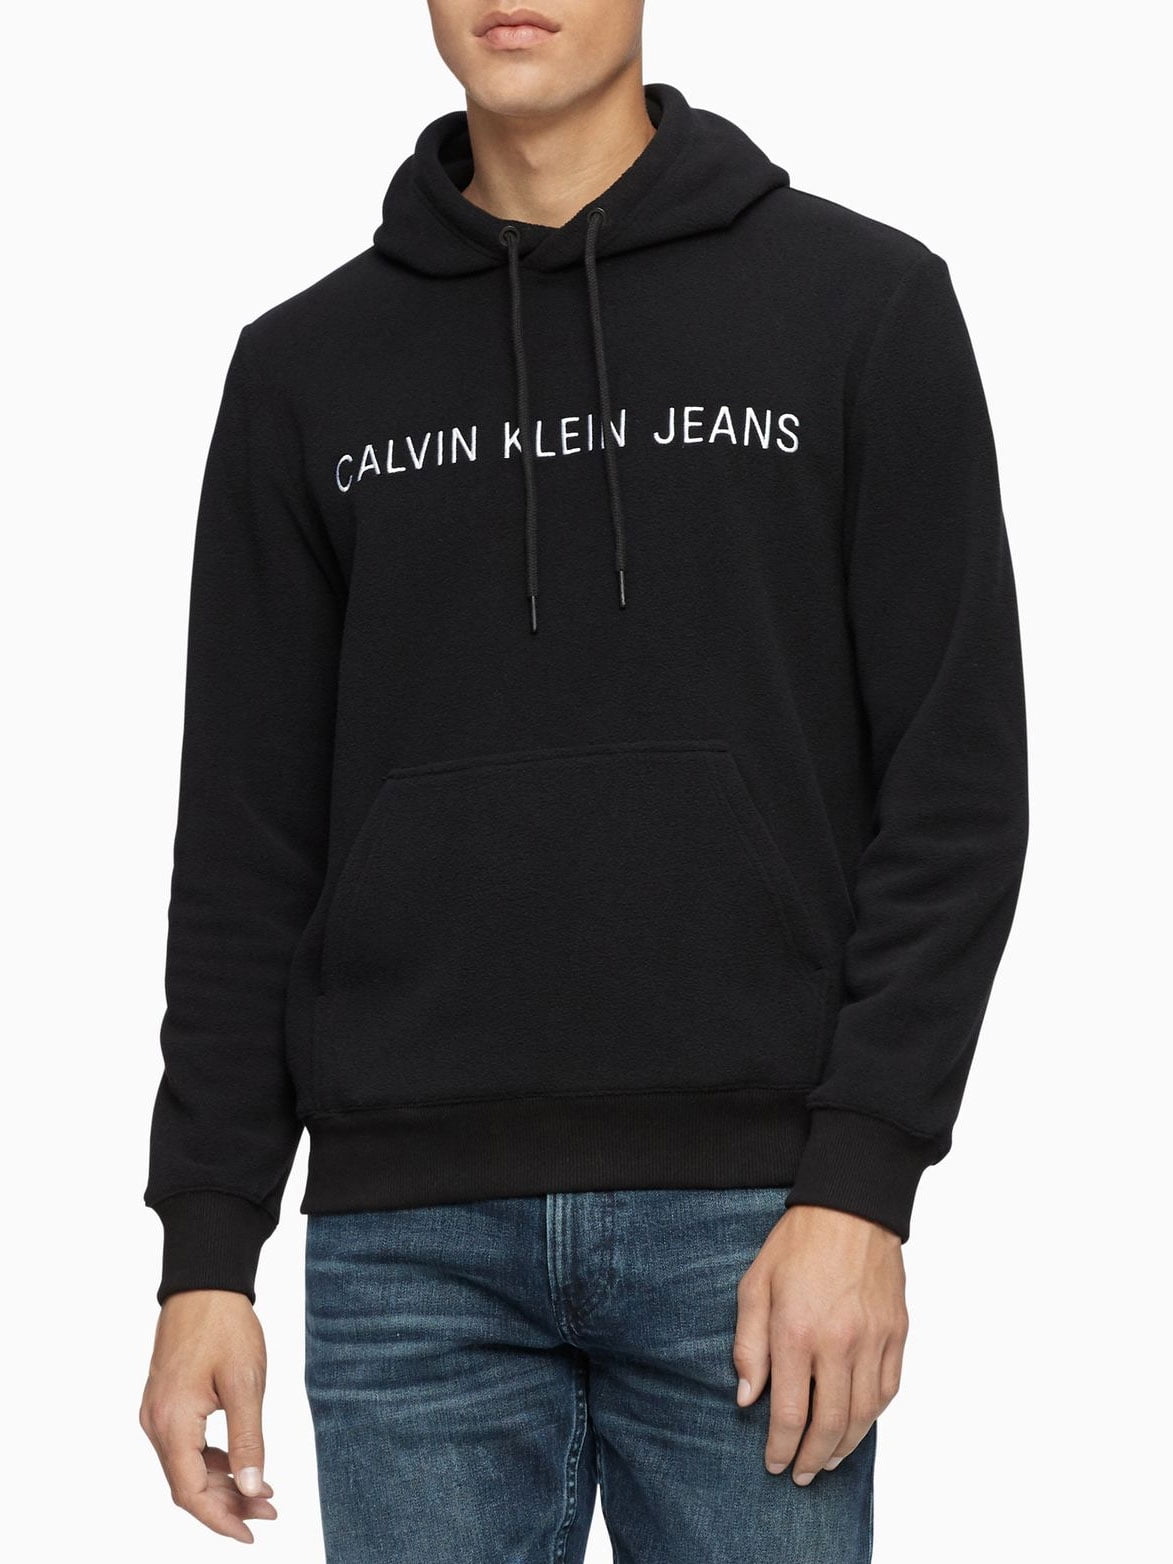 Calvin Klein Men\'s Polar Fleece Hoodie, Black, XLarge